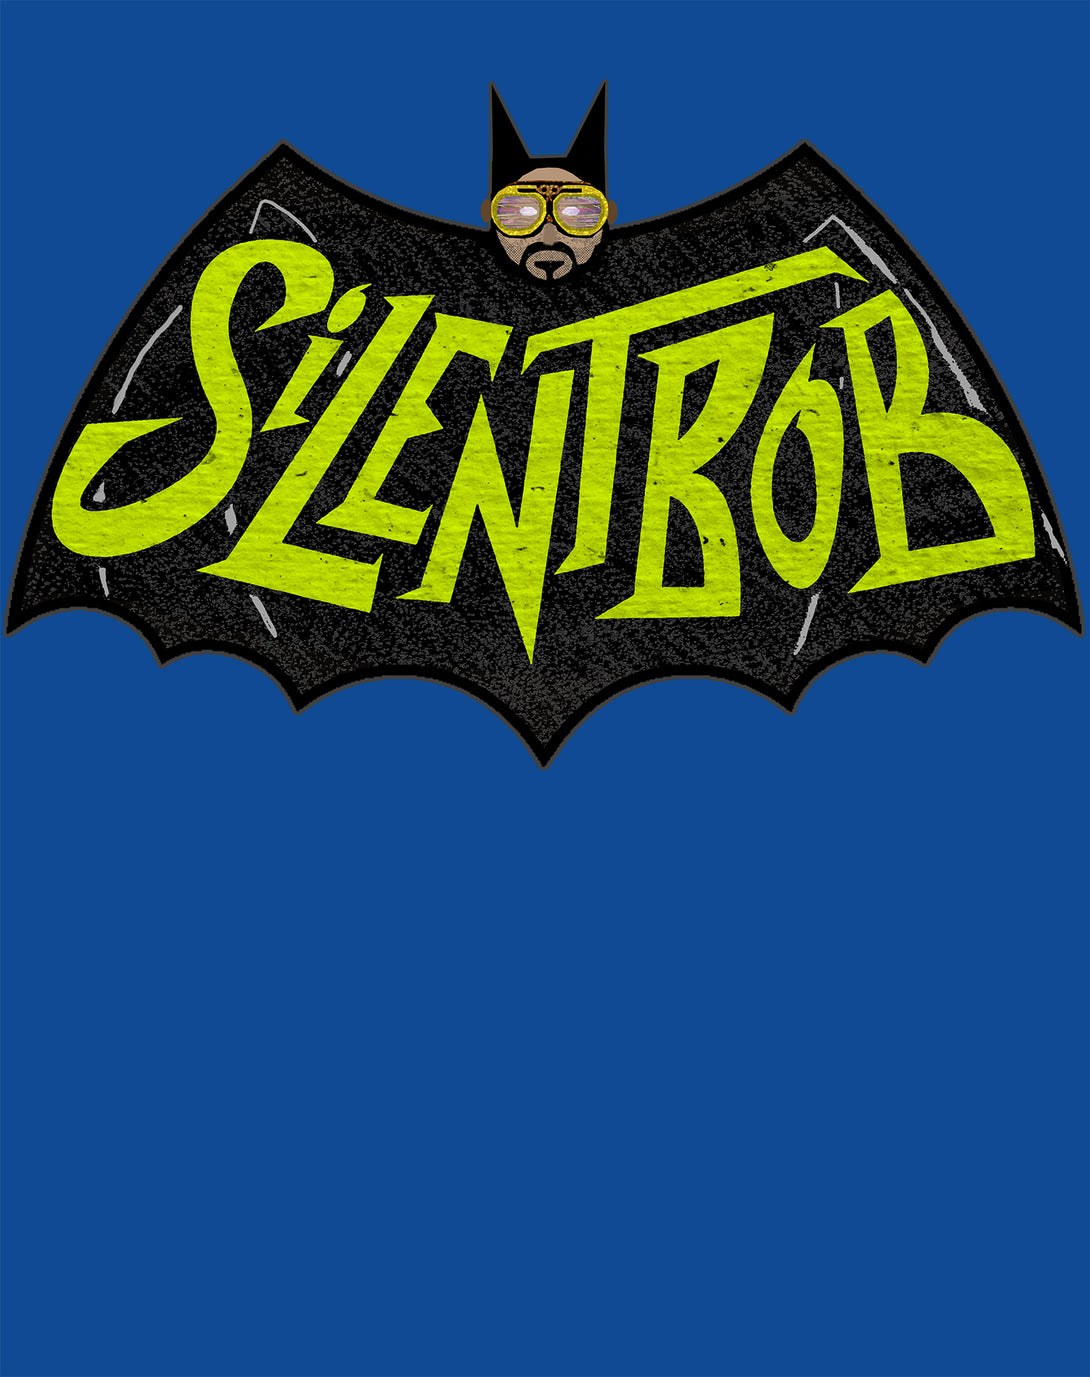 Kevin Smith View Askewniverse Logo Silent Bat Bob Official Men's T-Shirt Blue - Urban Species Design Close Up